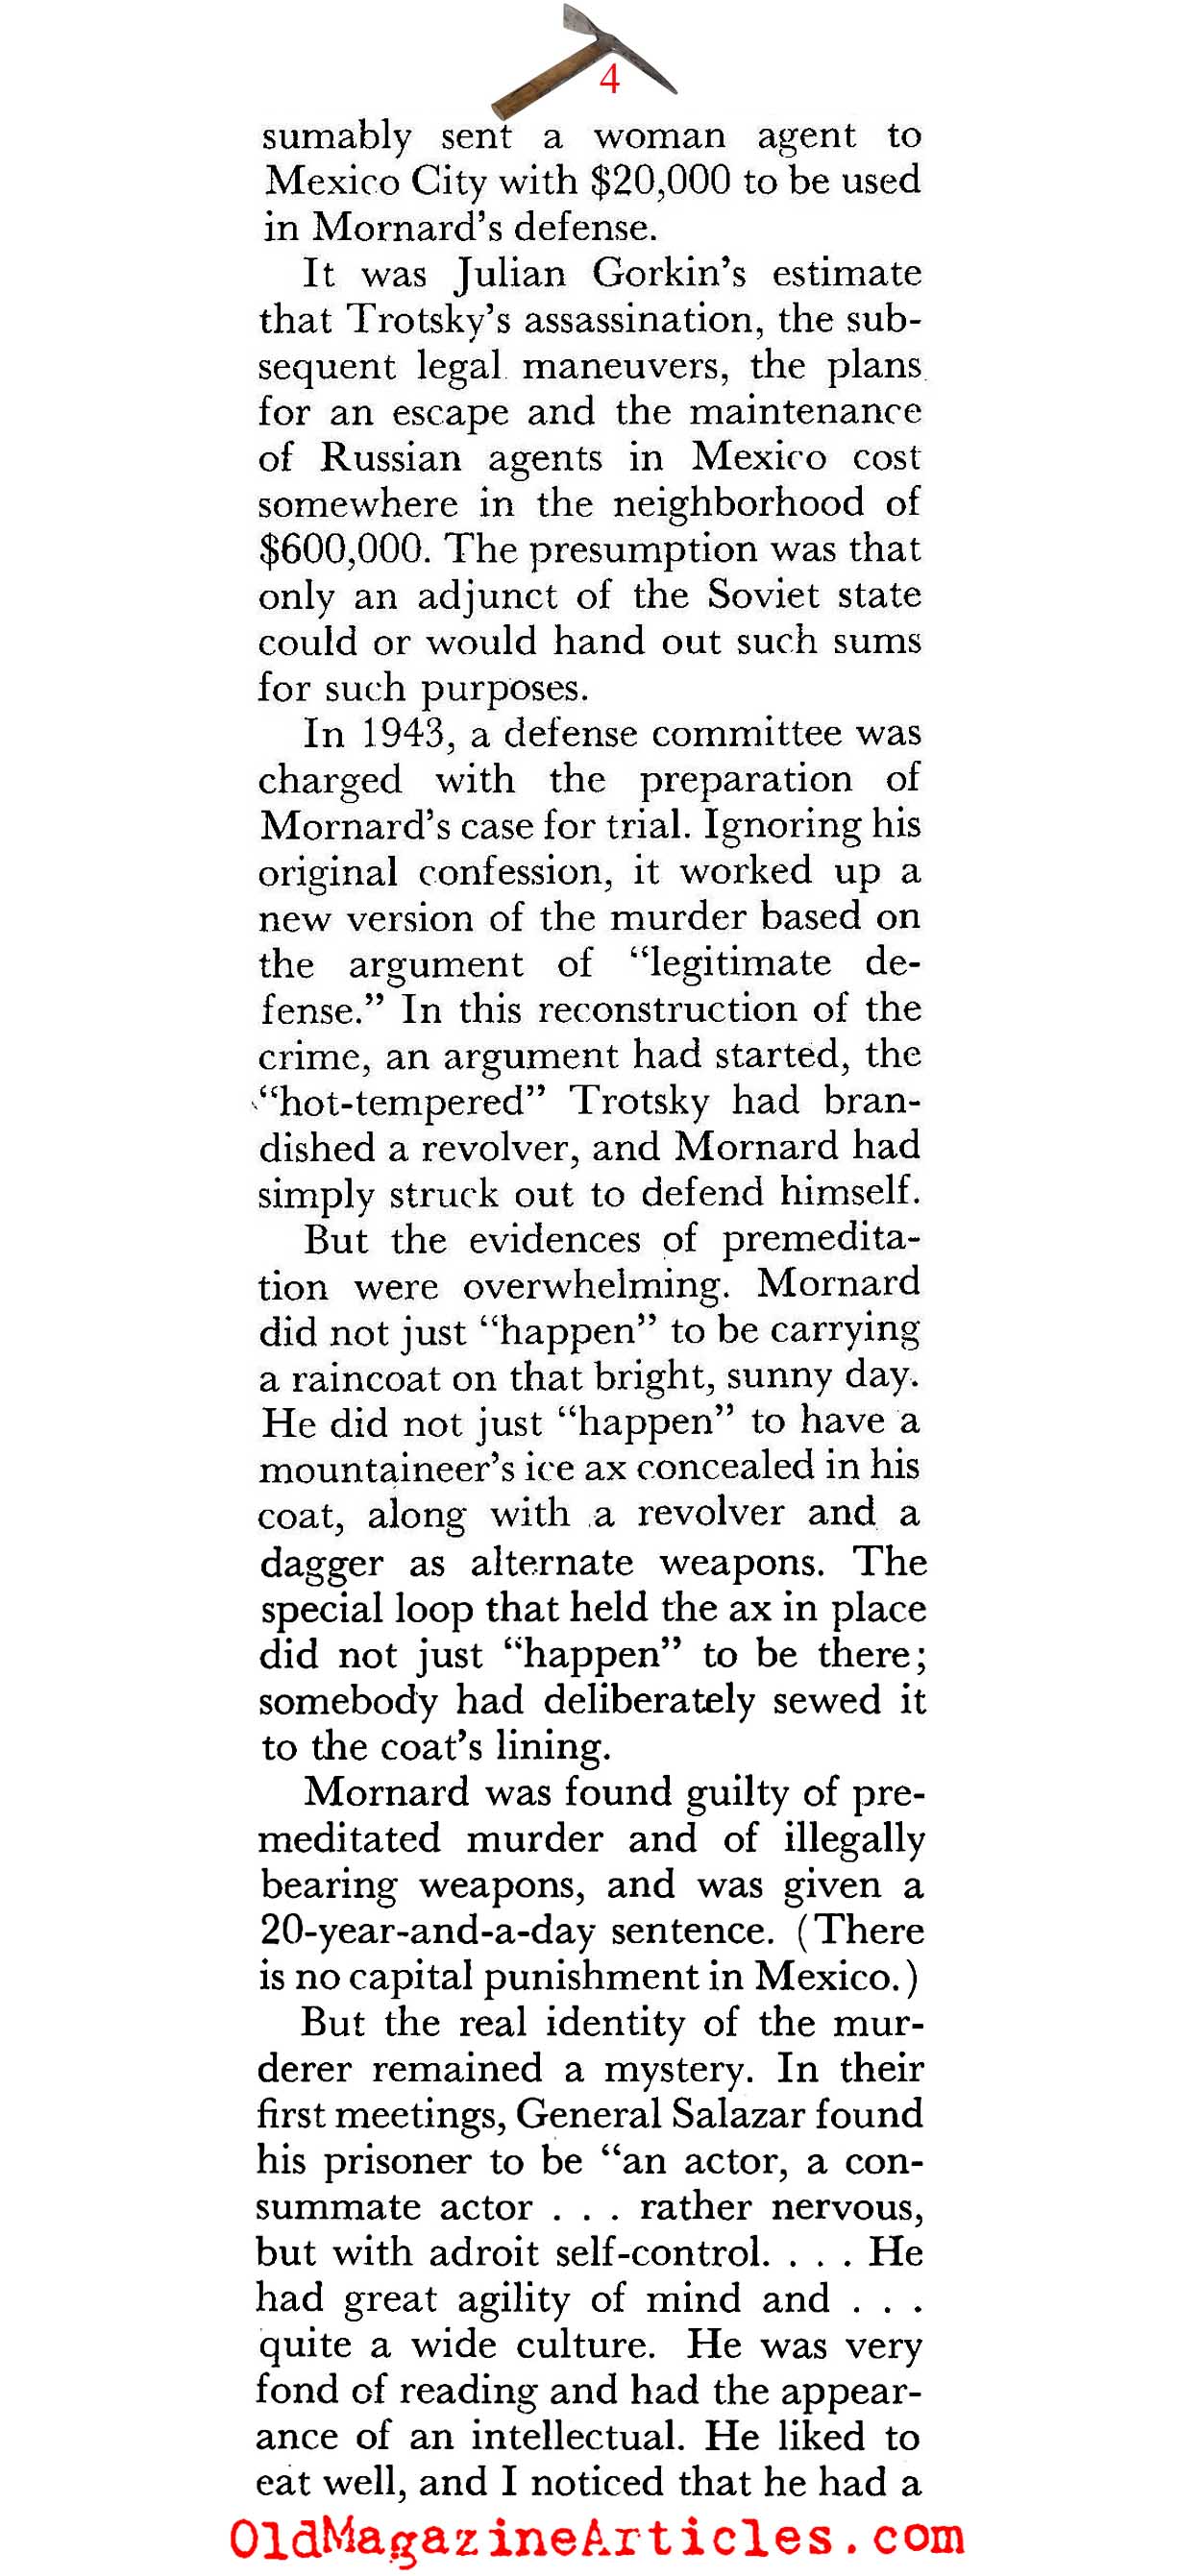 He Murdered Trotsky (Coronet Magazine, 1959)